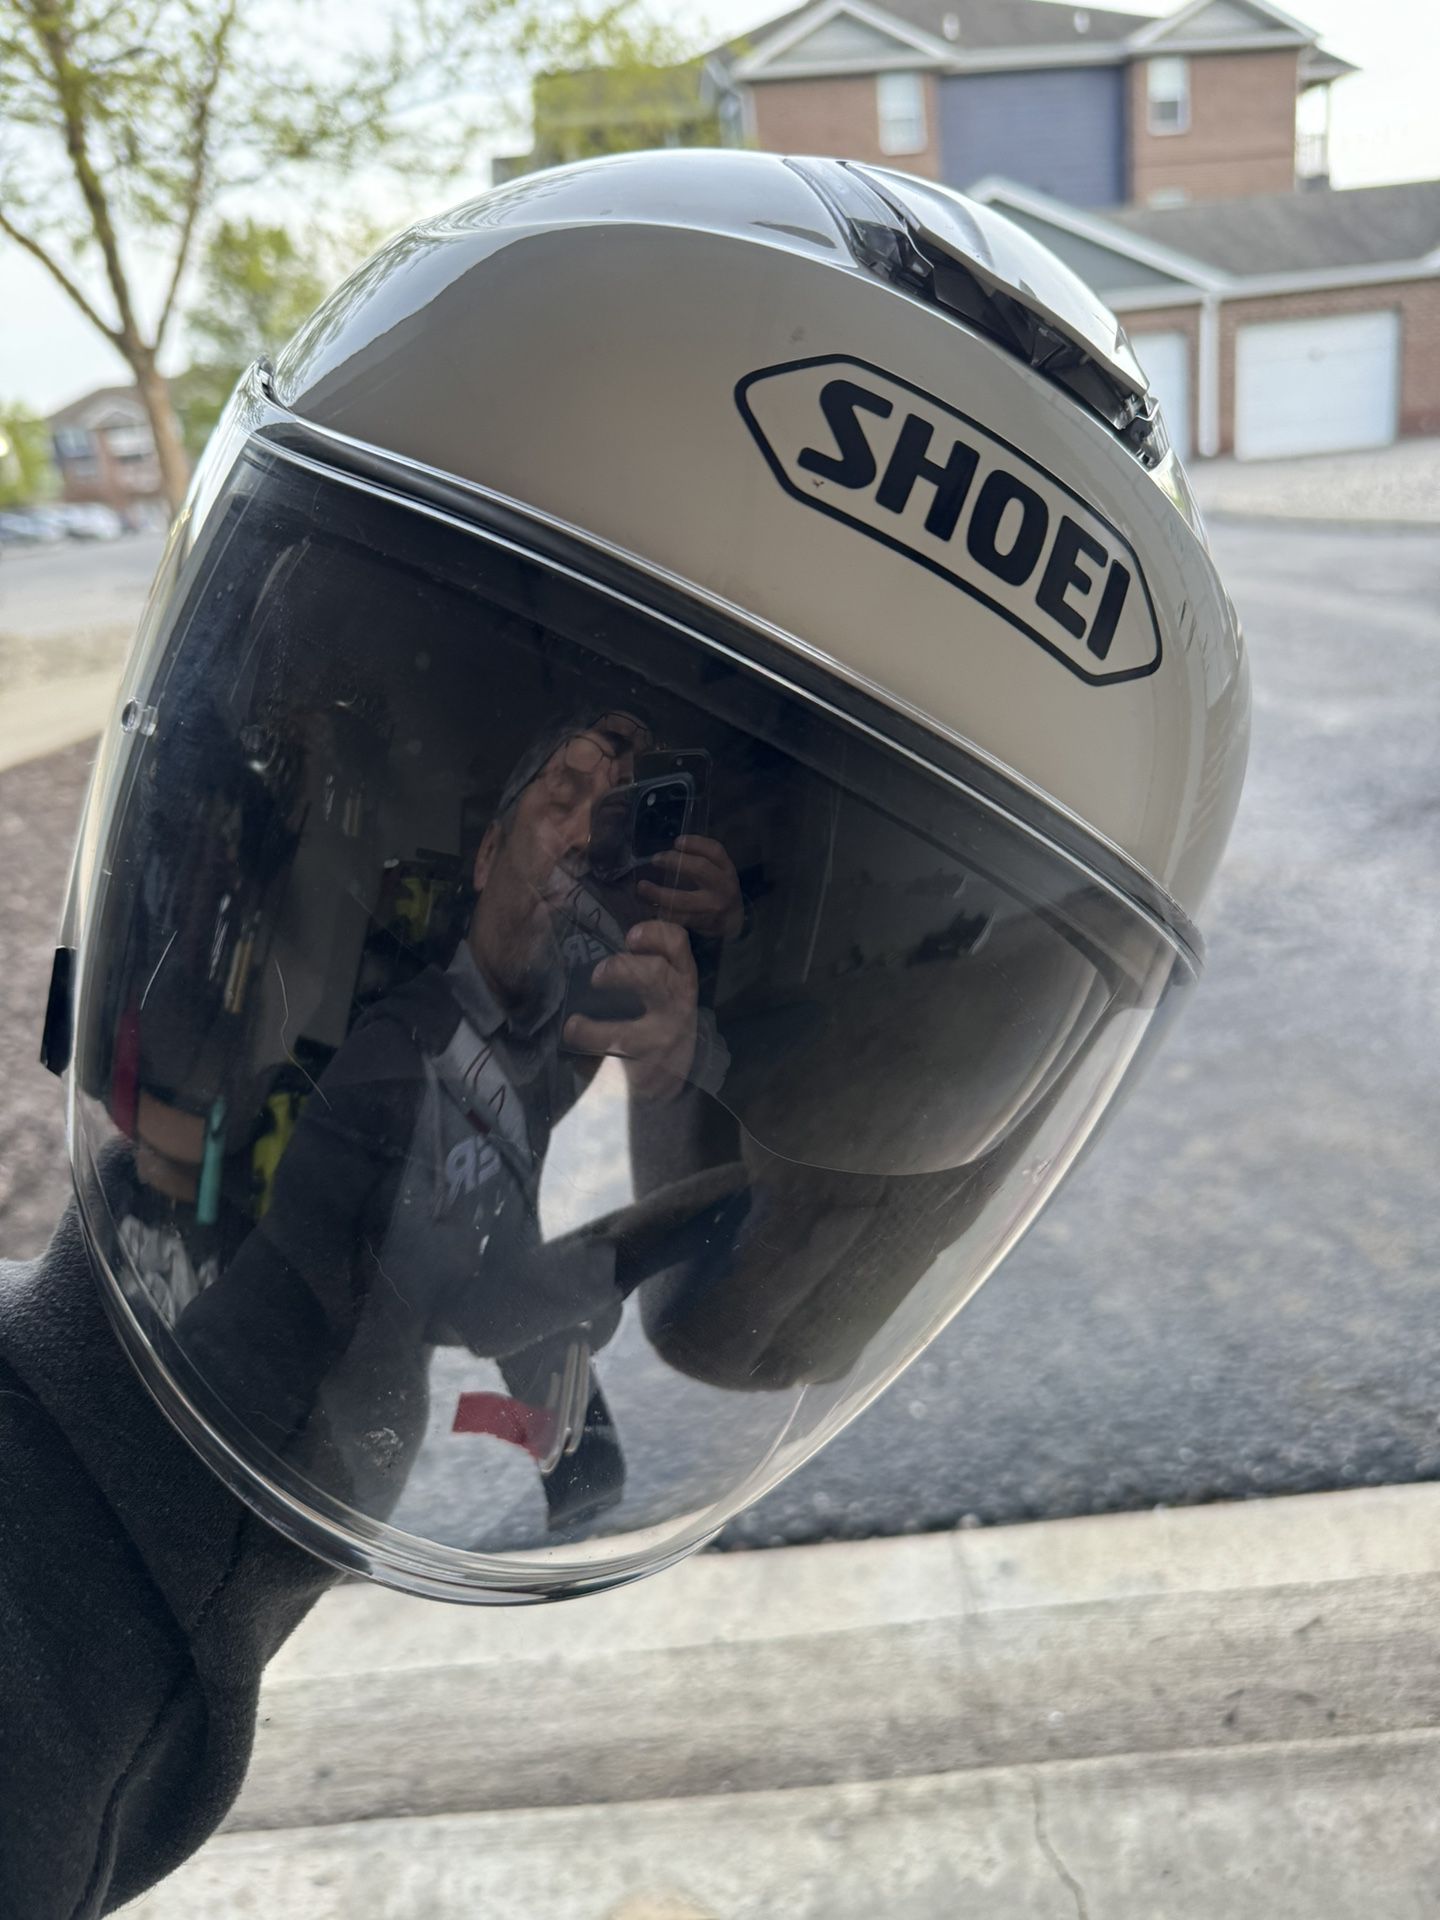 shoei J L-cruise Helmet